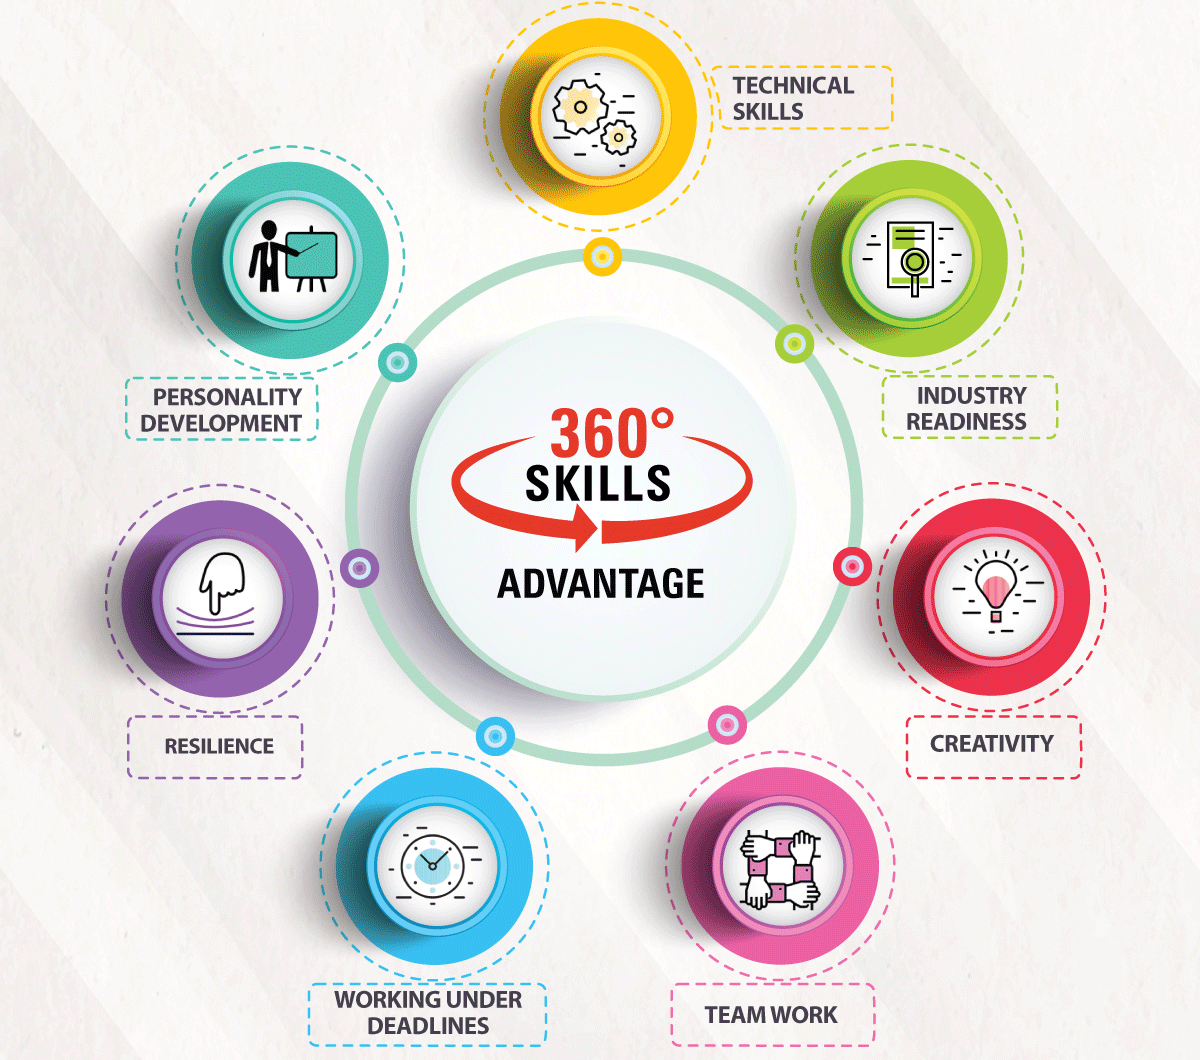  '360 Skills Advanced' MAAC Vasai